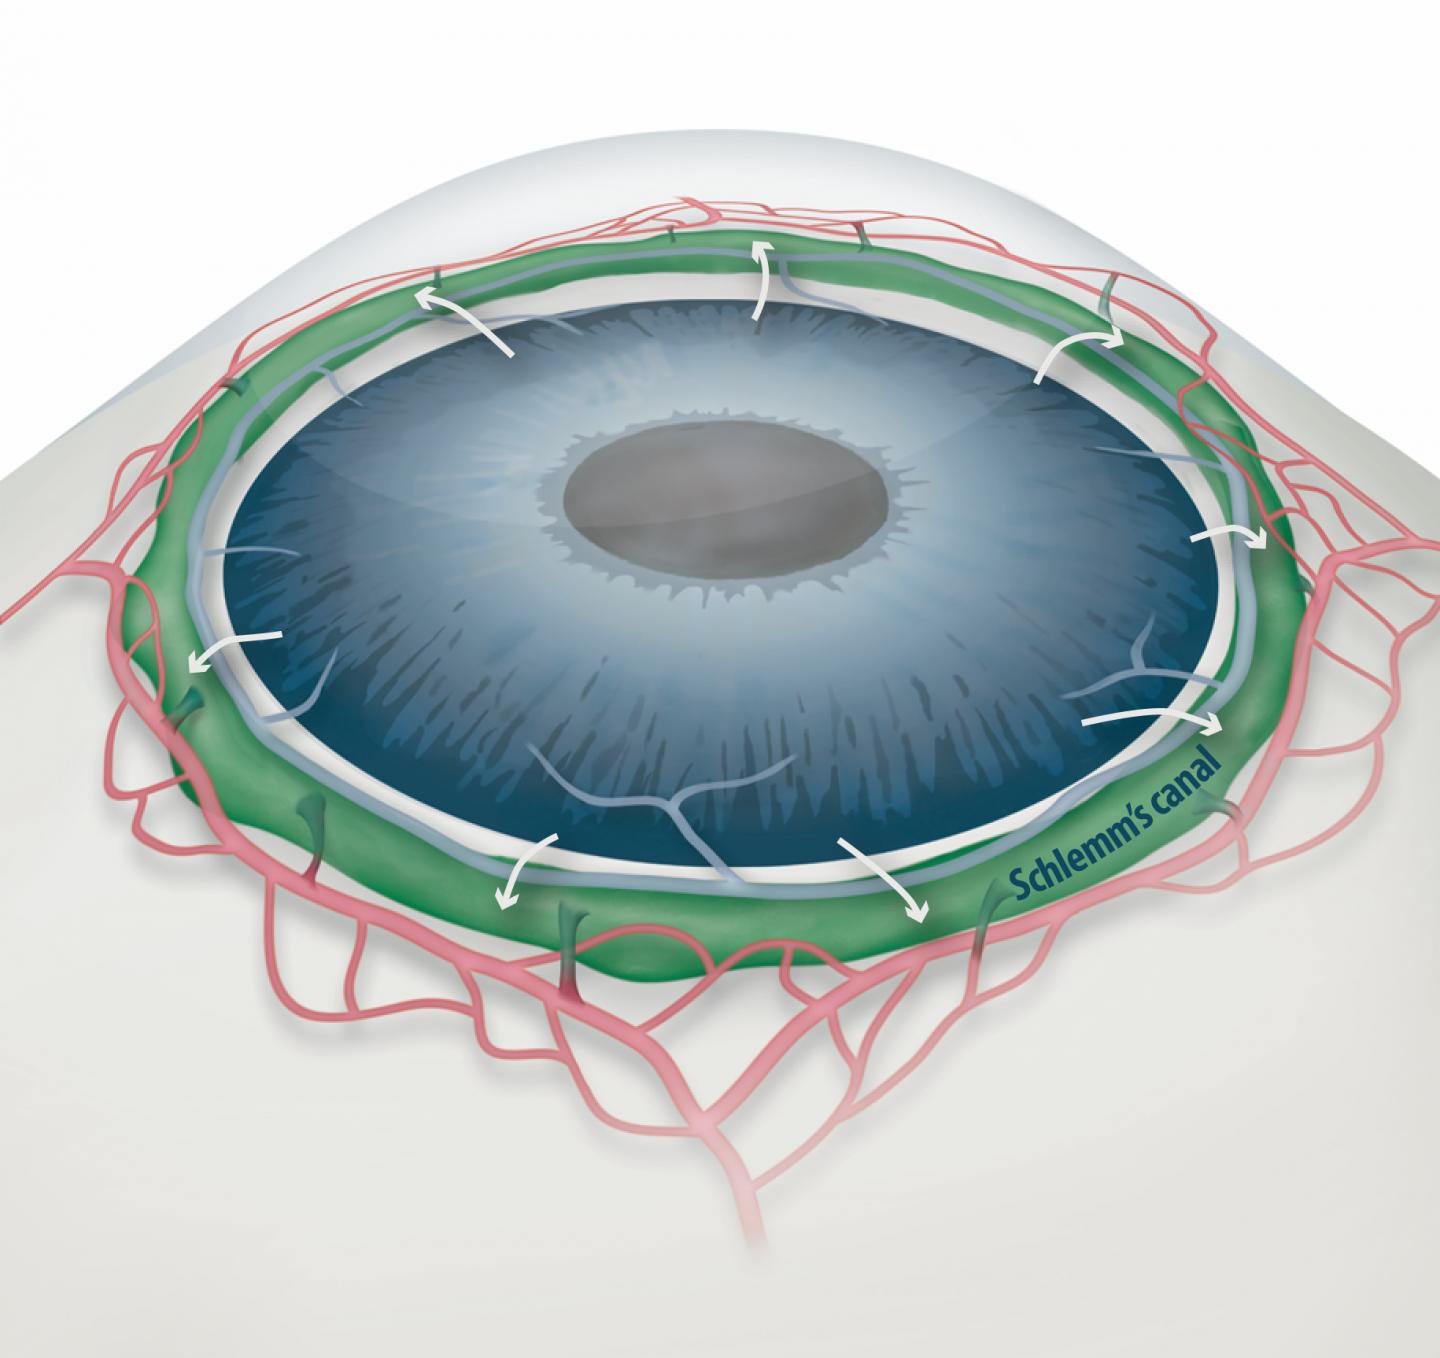 Schlemm's Canal Position Inside the Eye